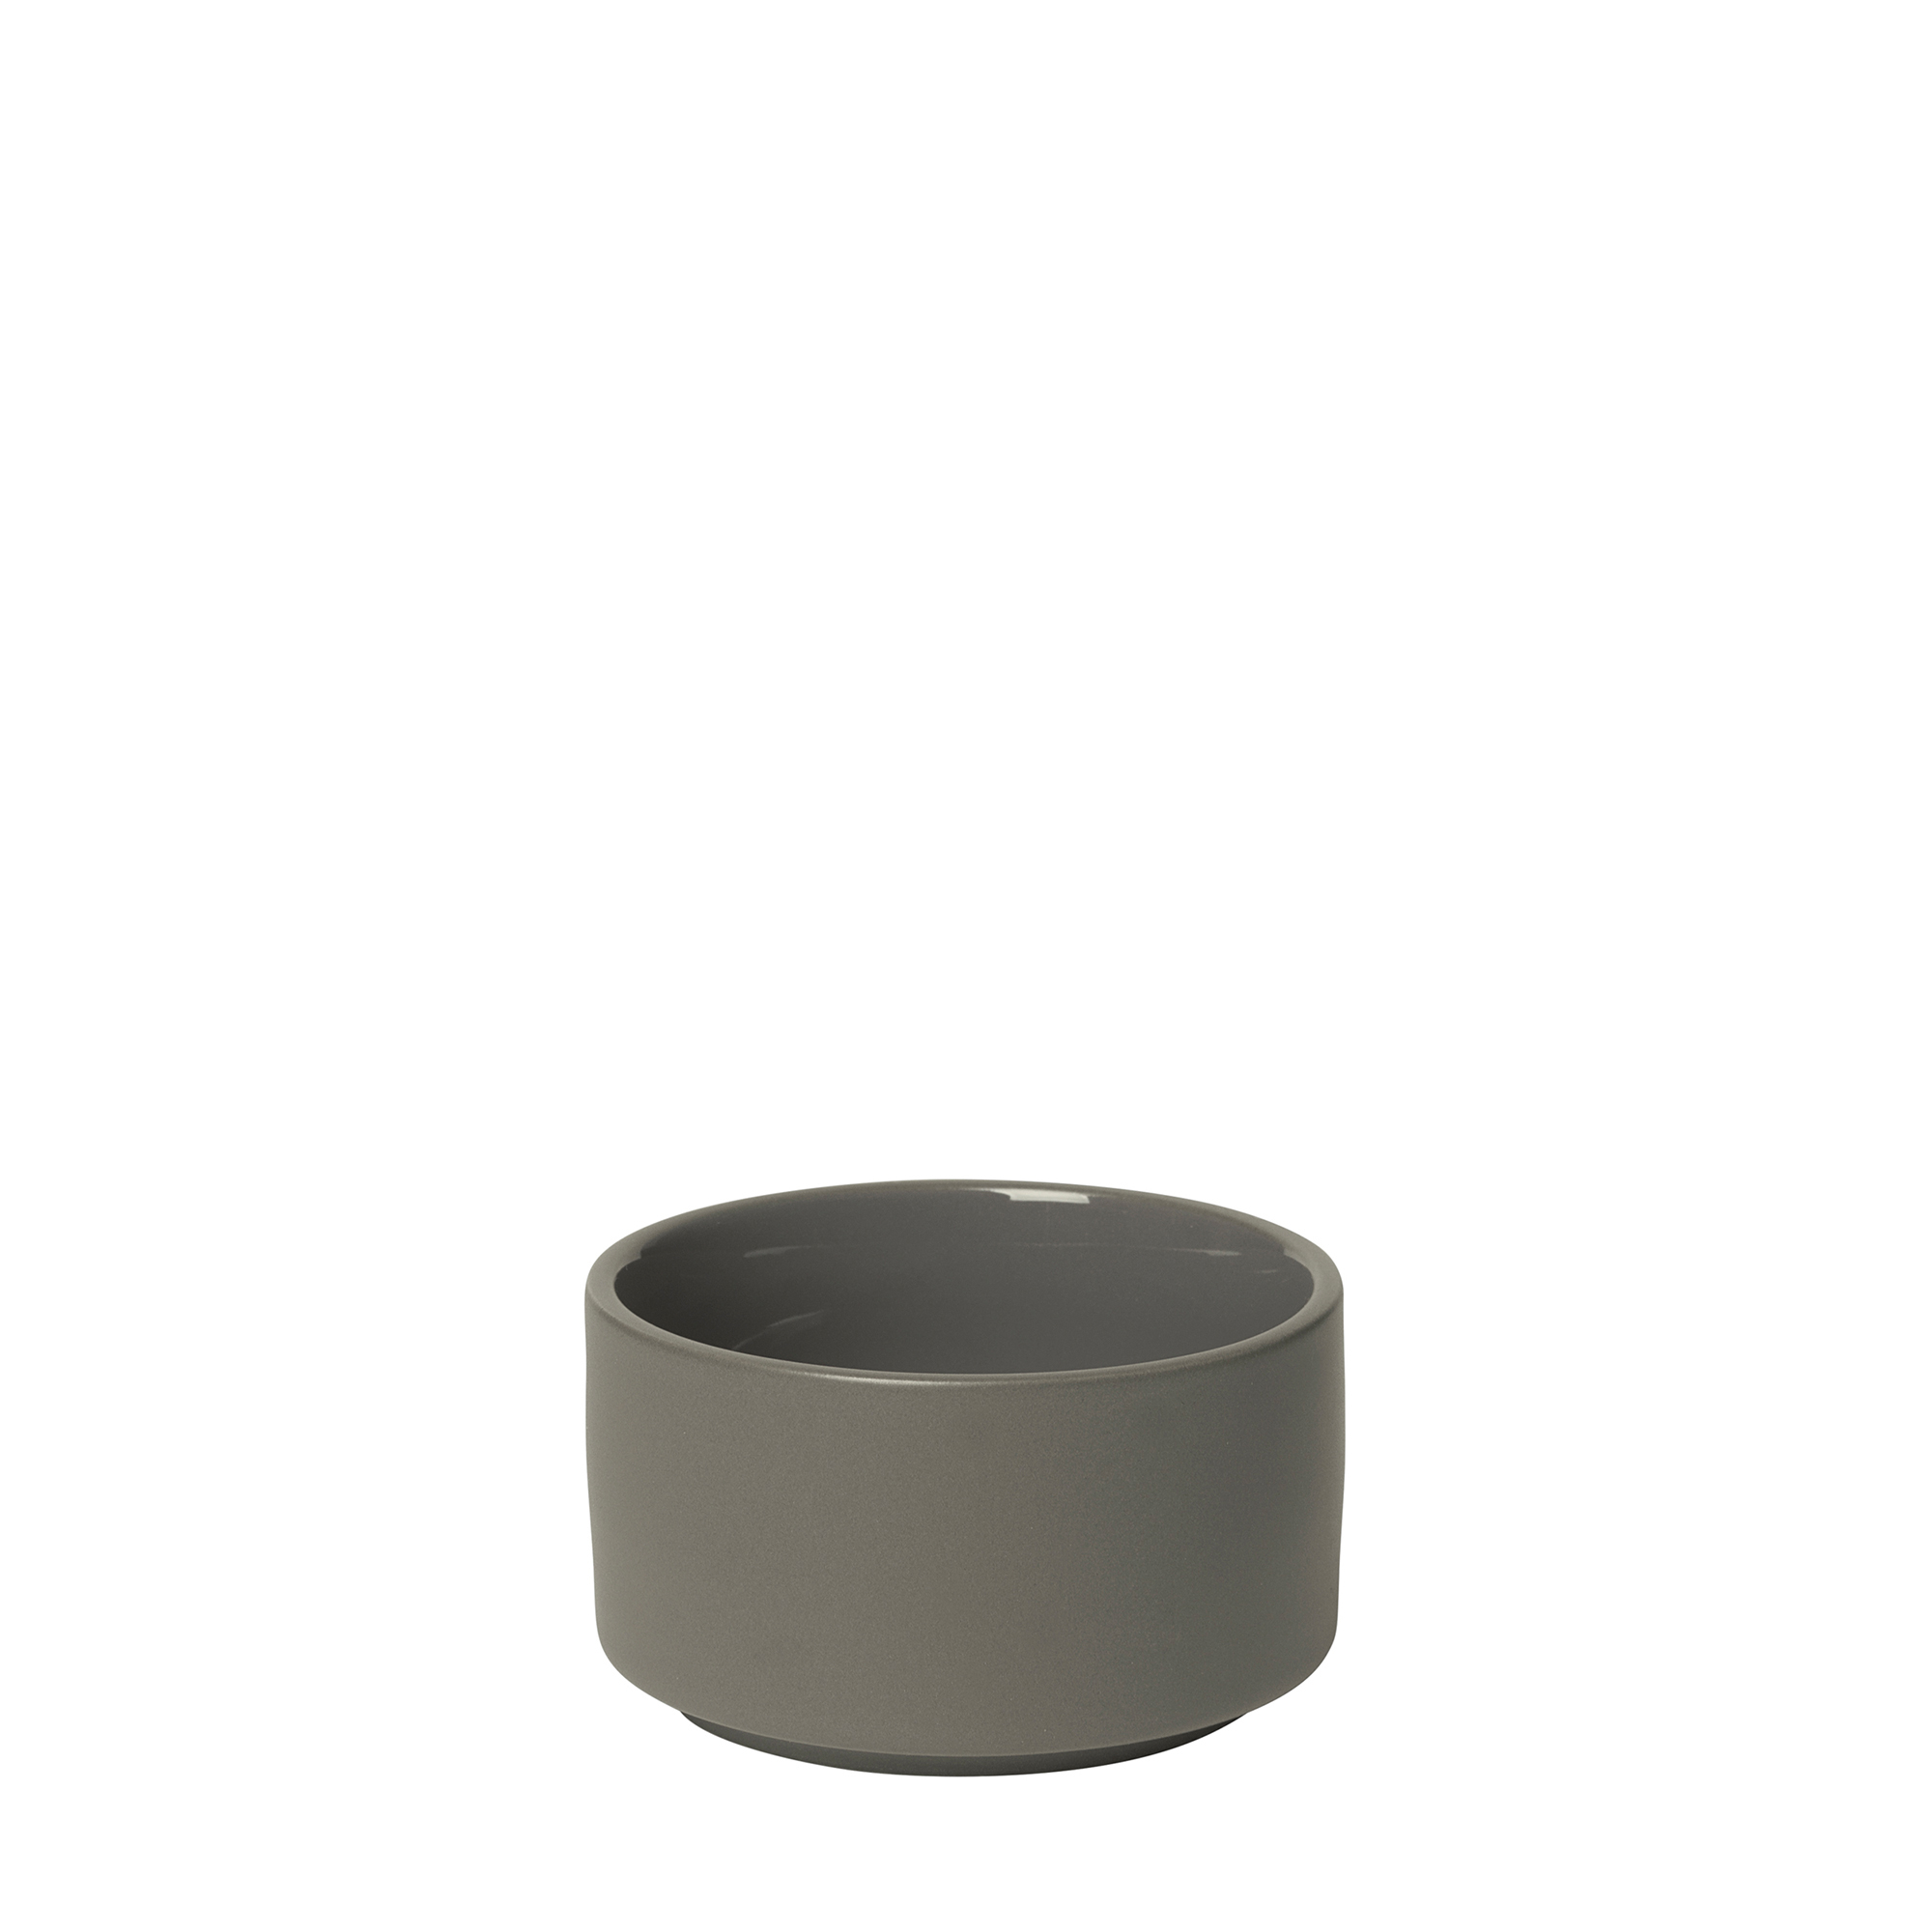 Snackschale -PILAR- Pewter, 130 ml, Ø 8,5 cm. Material: Keramik. Von Blomus.